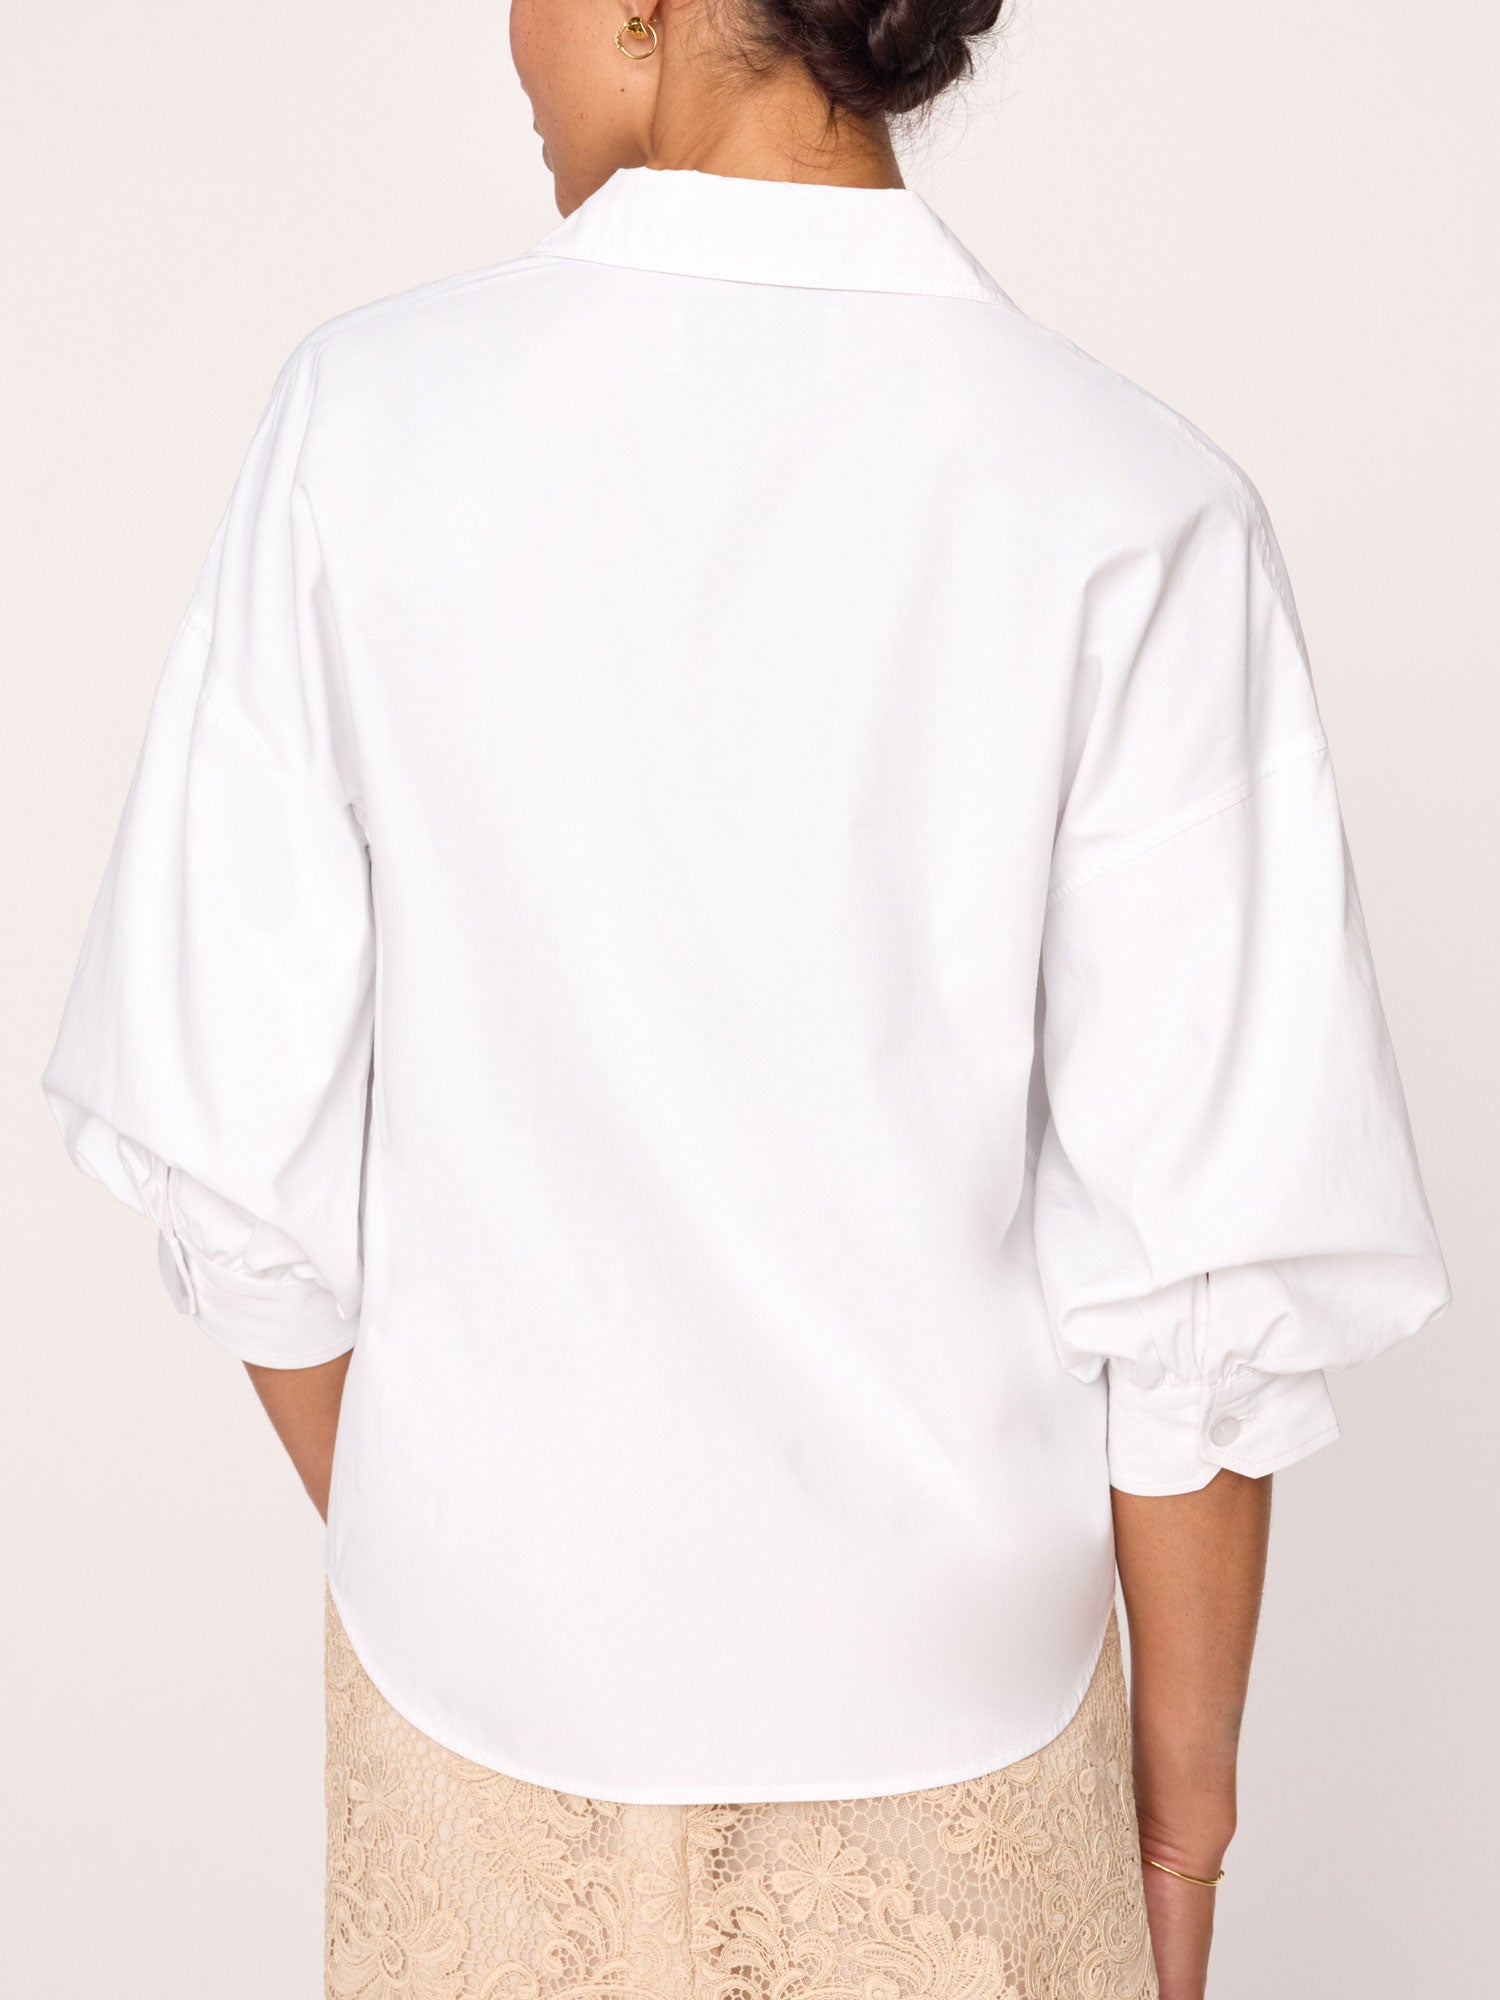 Kate V-neck button up white shirt back view